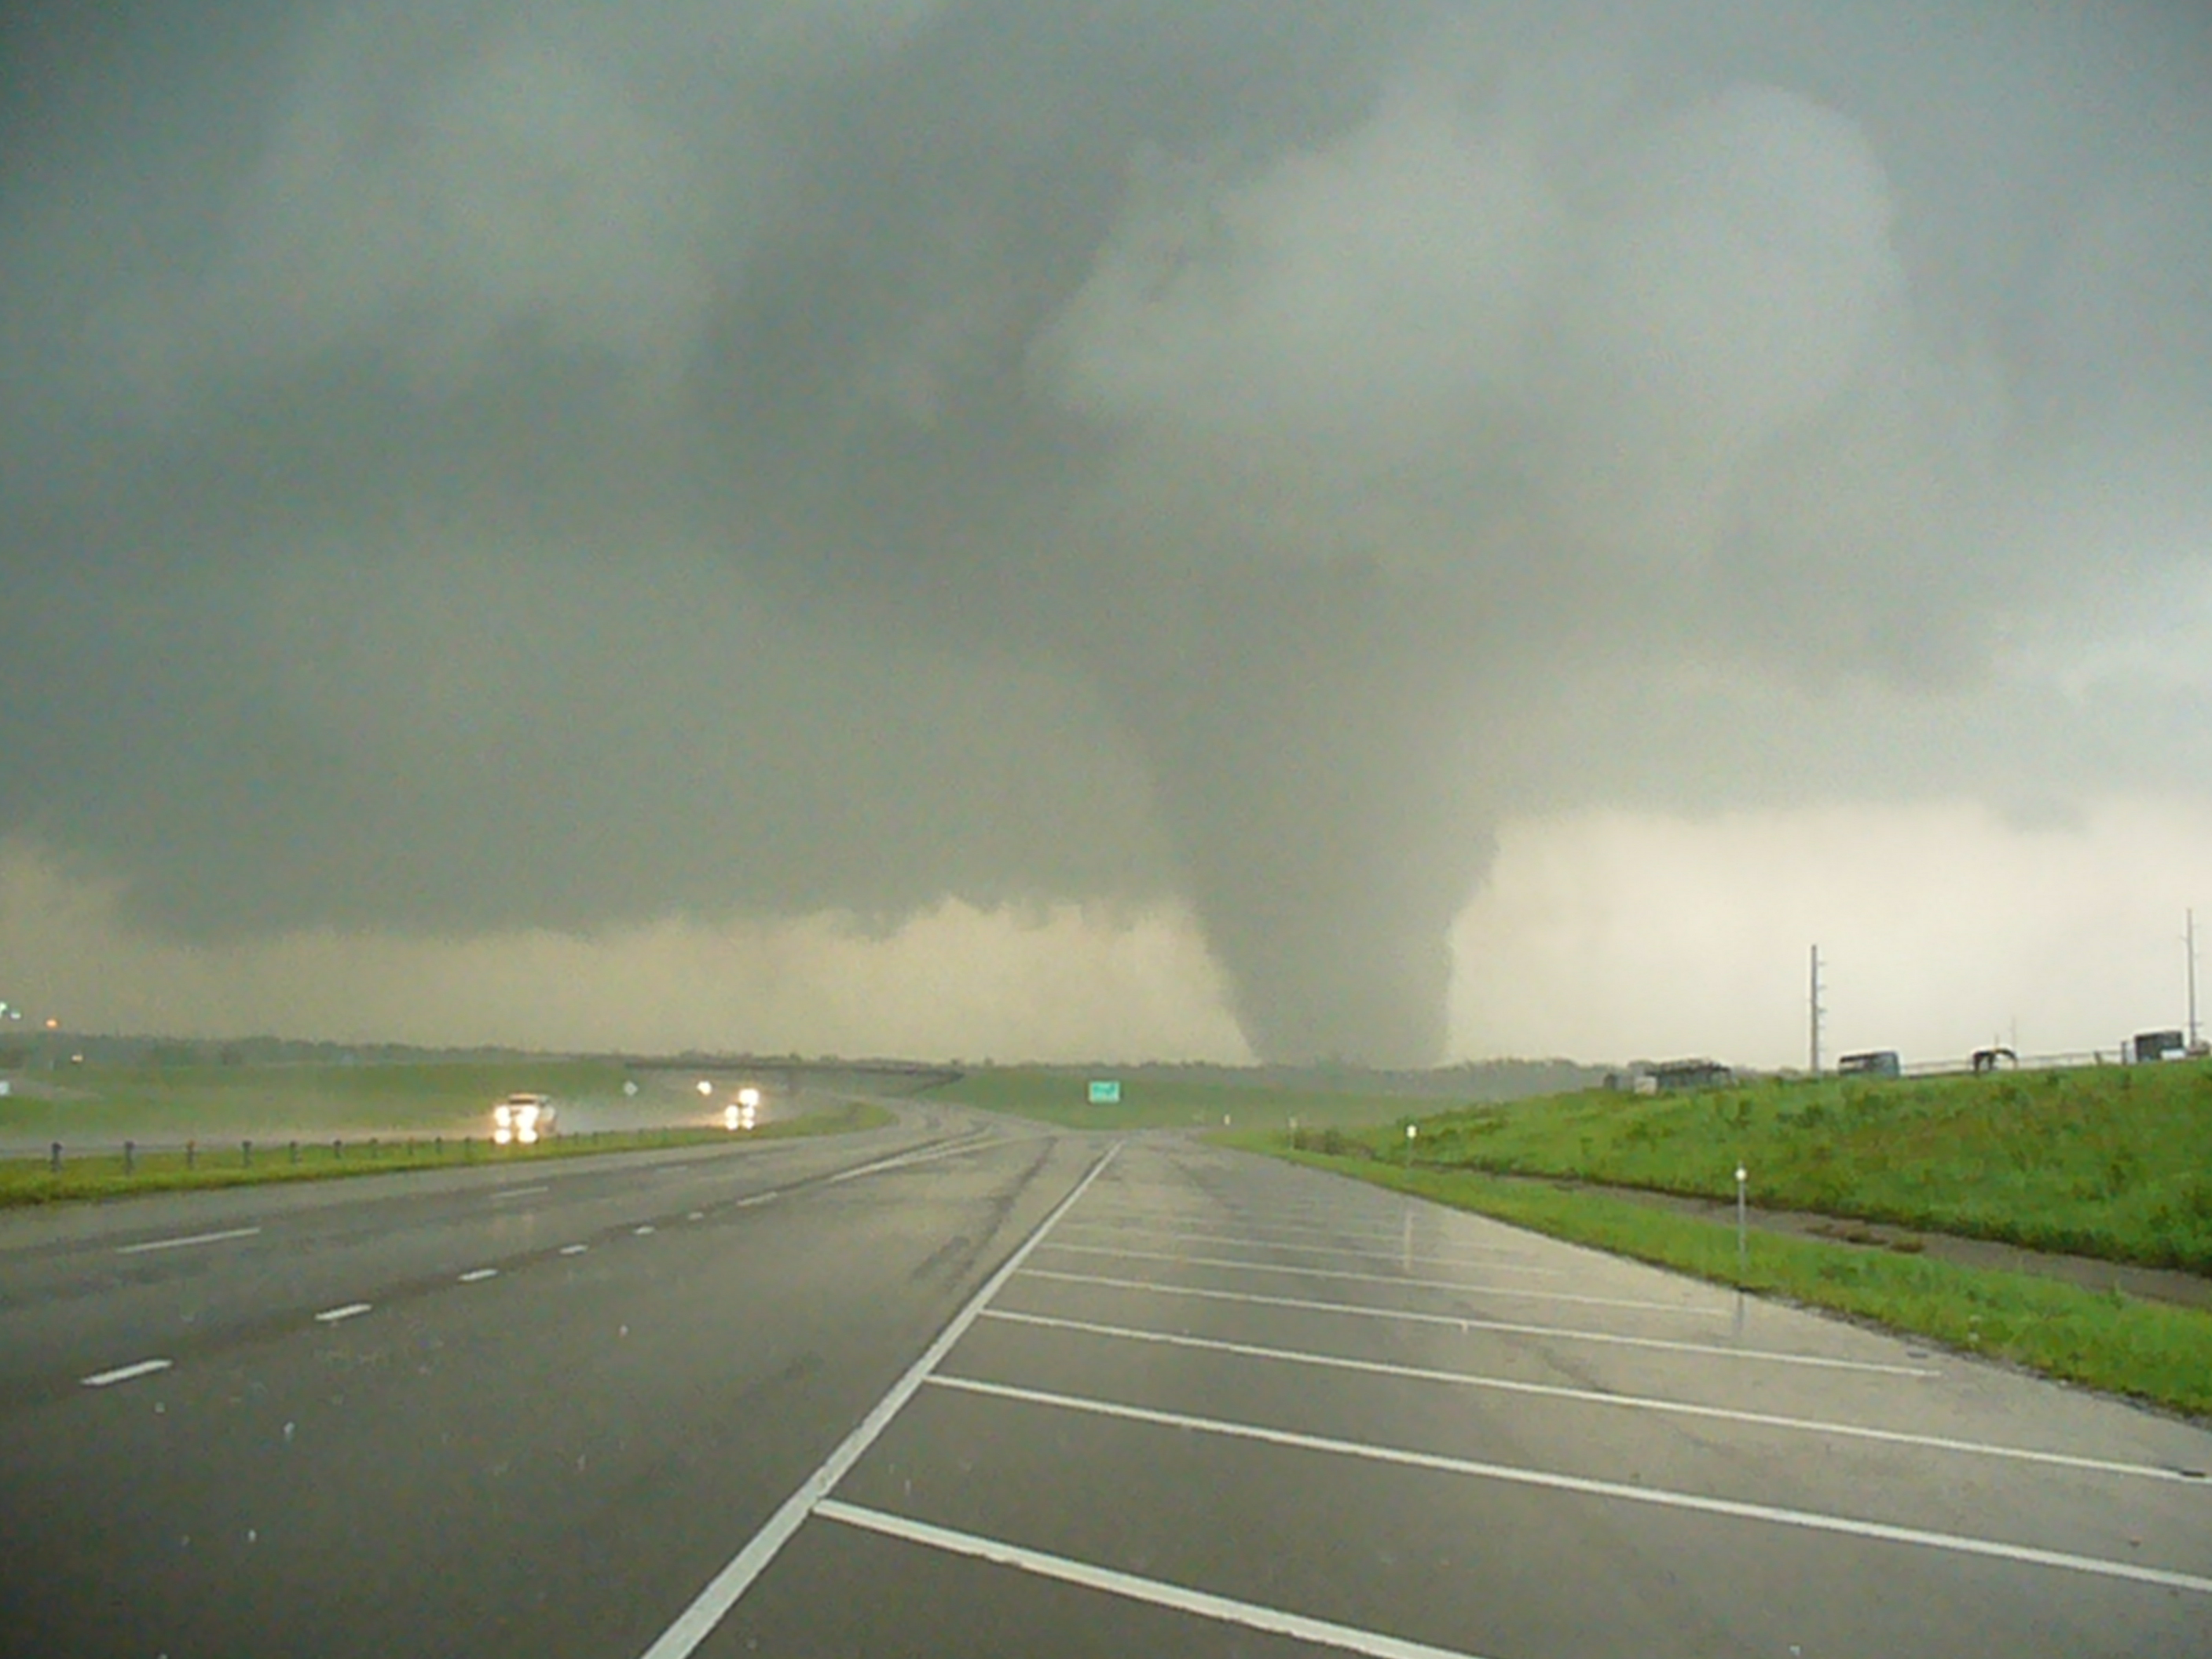 Photo of the May 19, 2013 Lake Thunderbird-Shawnee, OK EF-4 Tornado